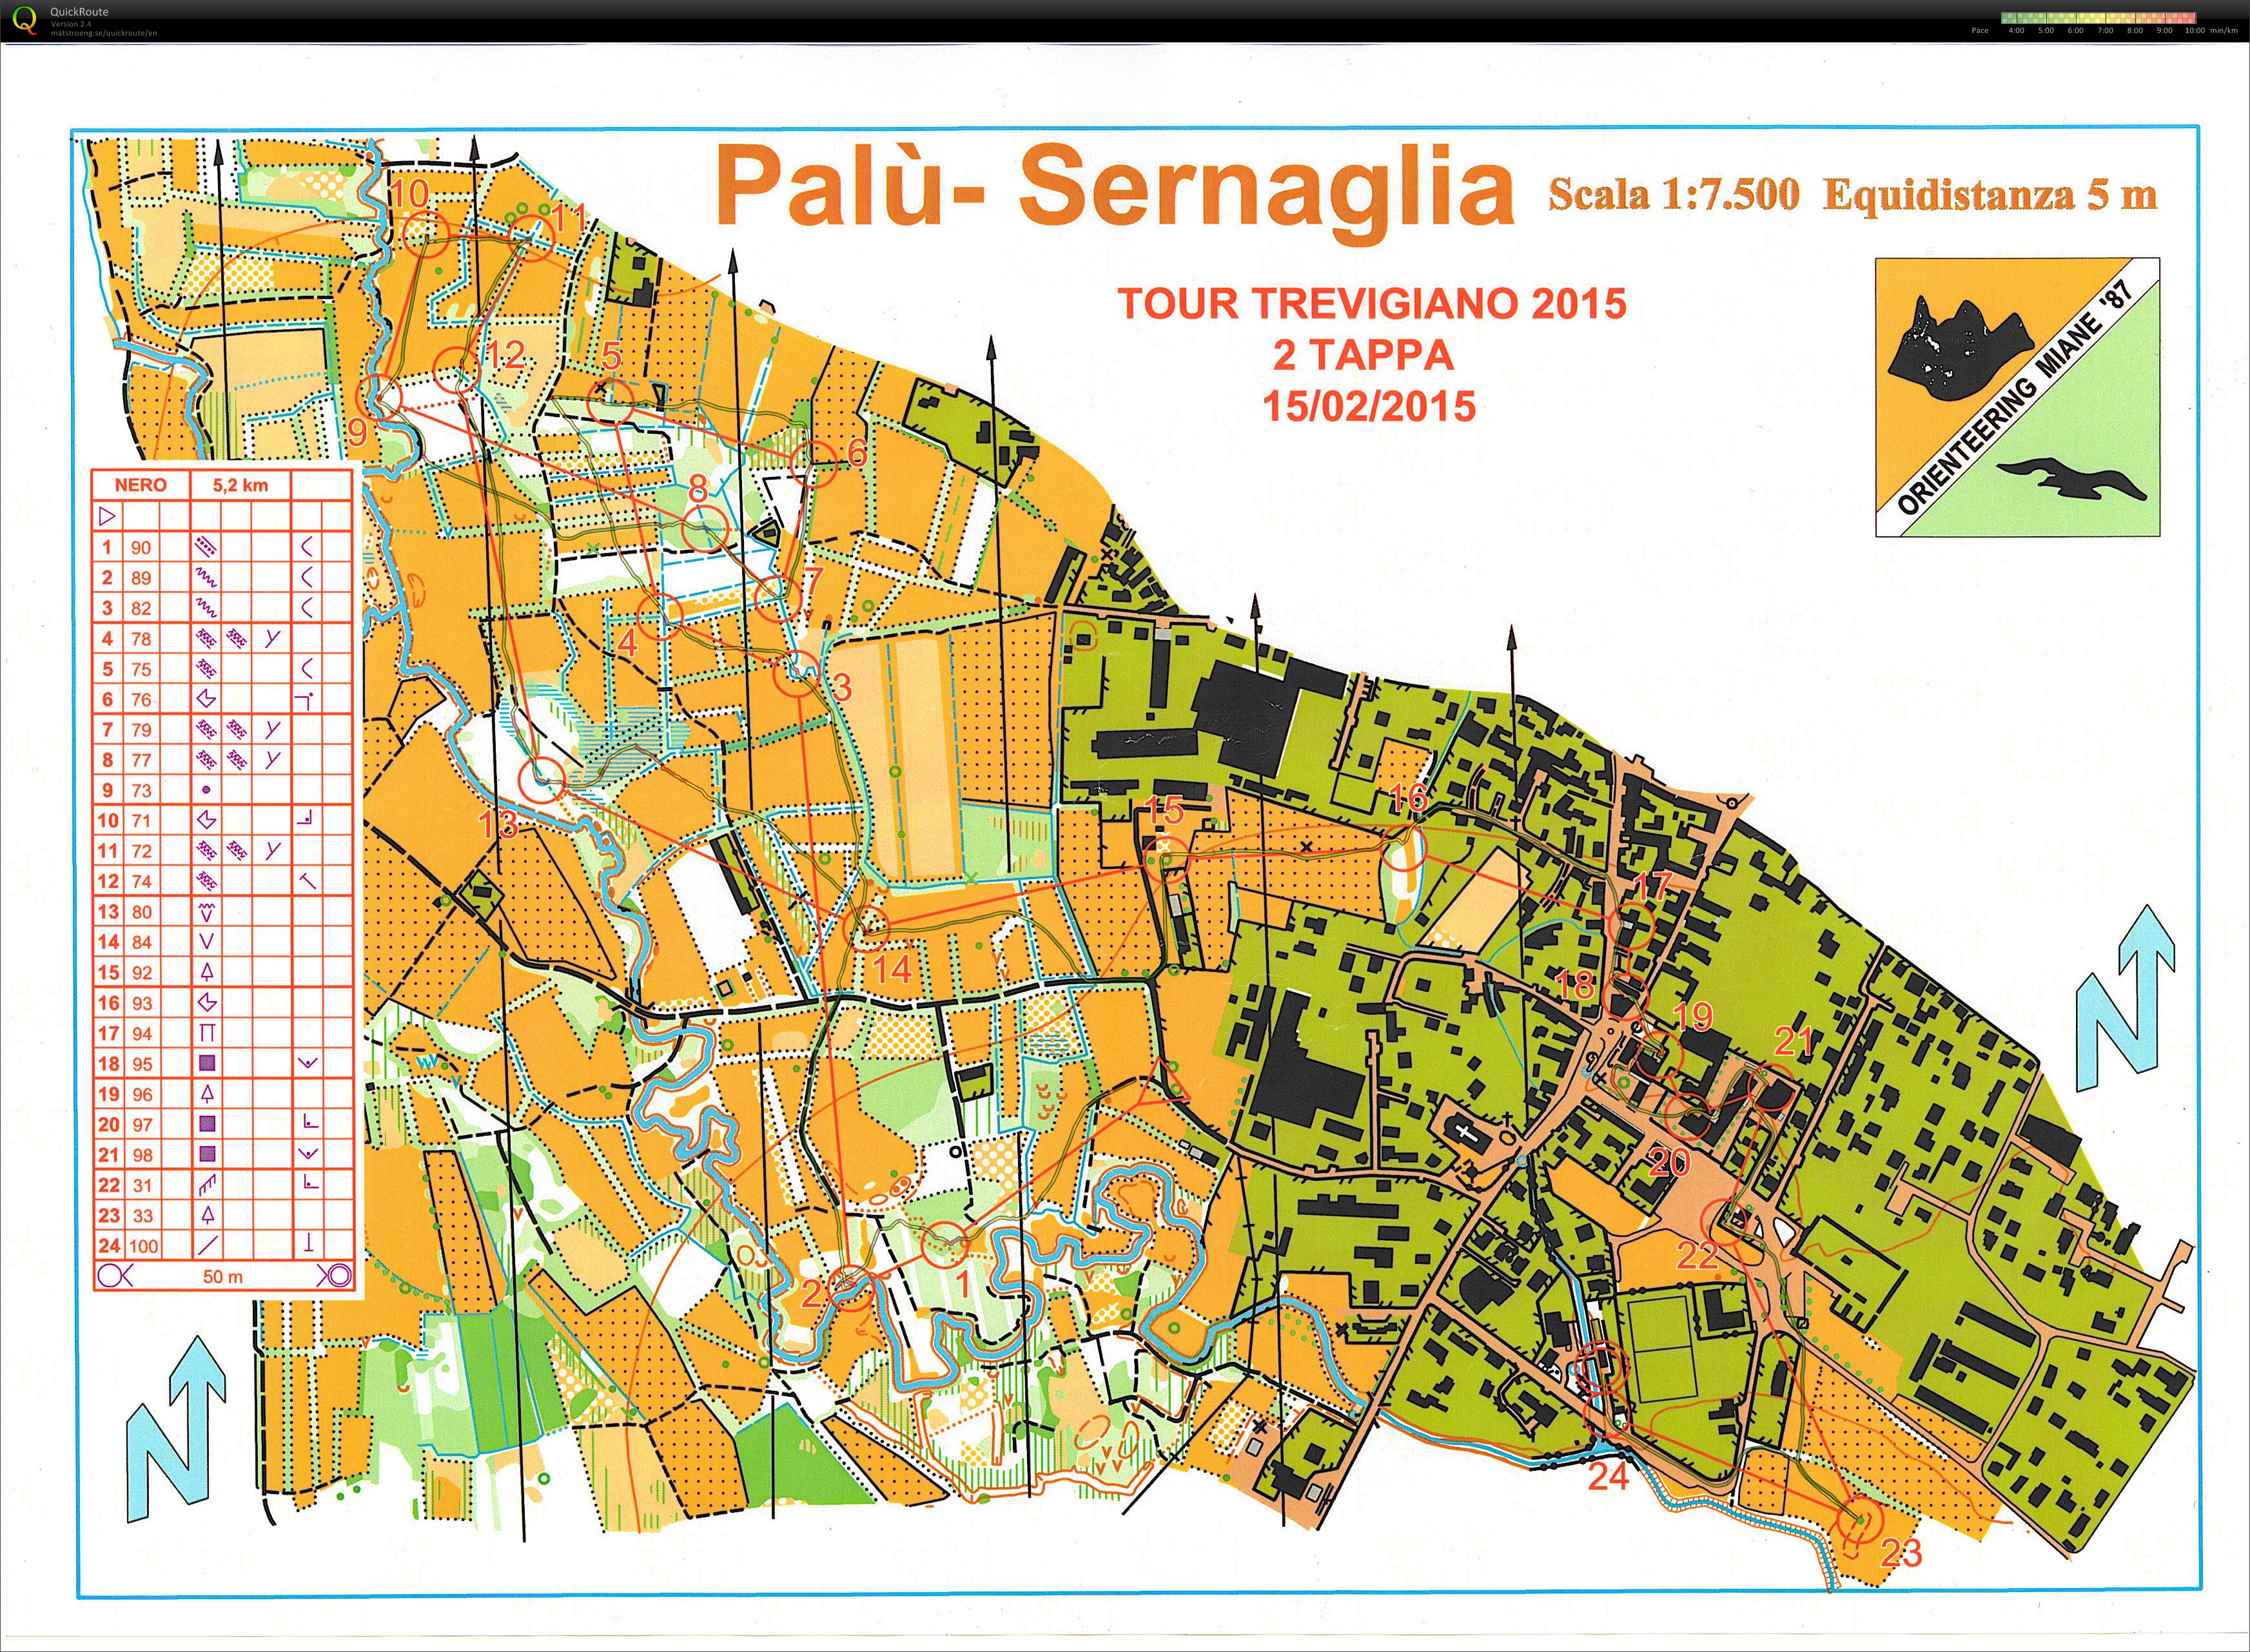 2a prova Tour Trevigiano 2015 (15-02-2015)